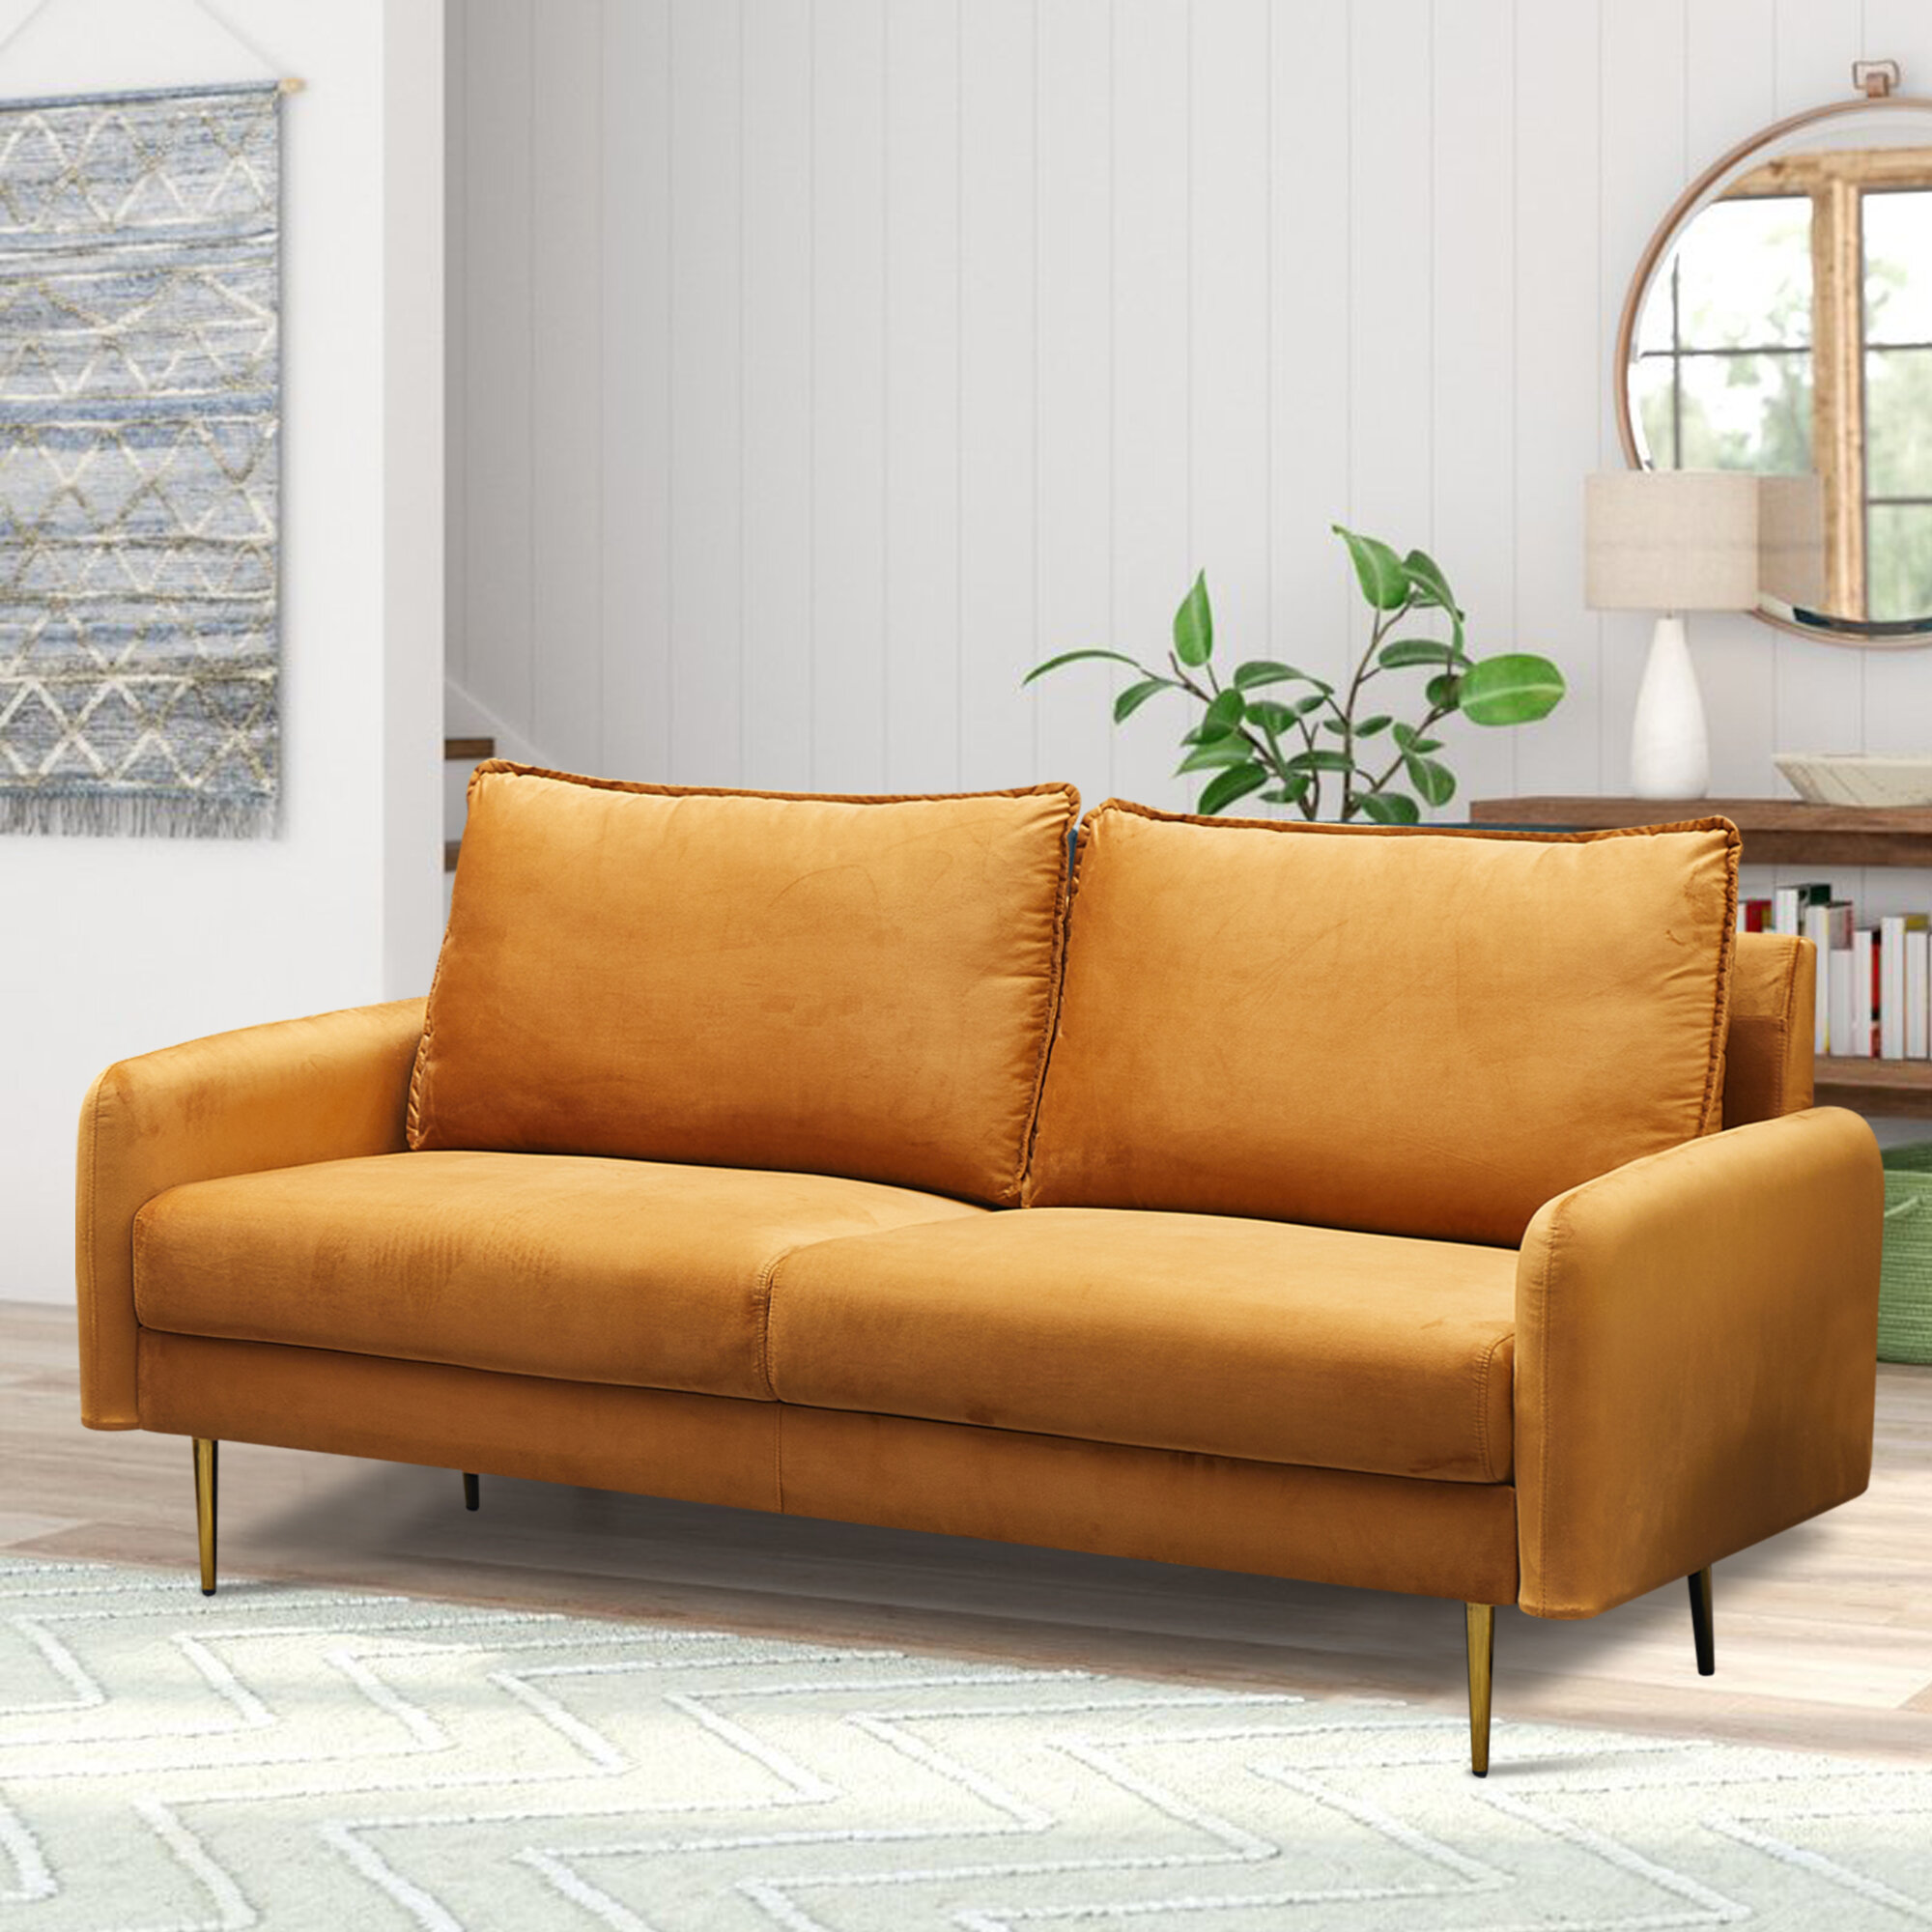 Kader blok Expliciet Everly Quinn Karamba 69'' Upholstered Sofa | Wayfair